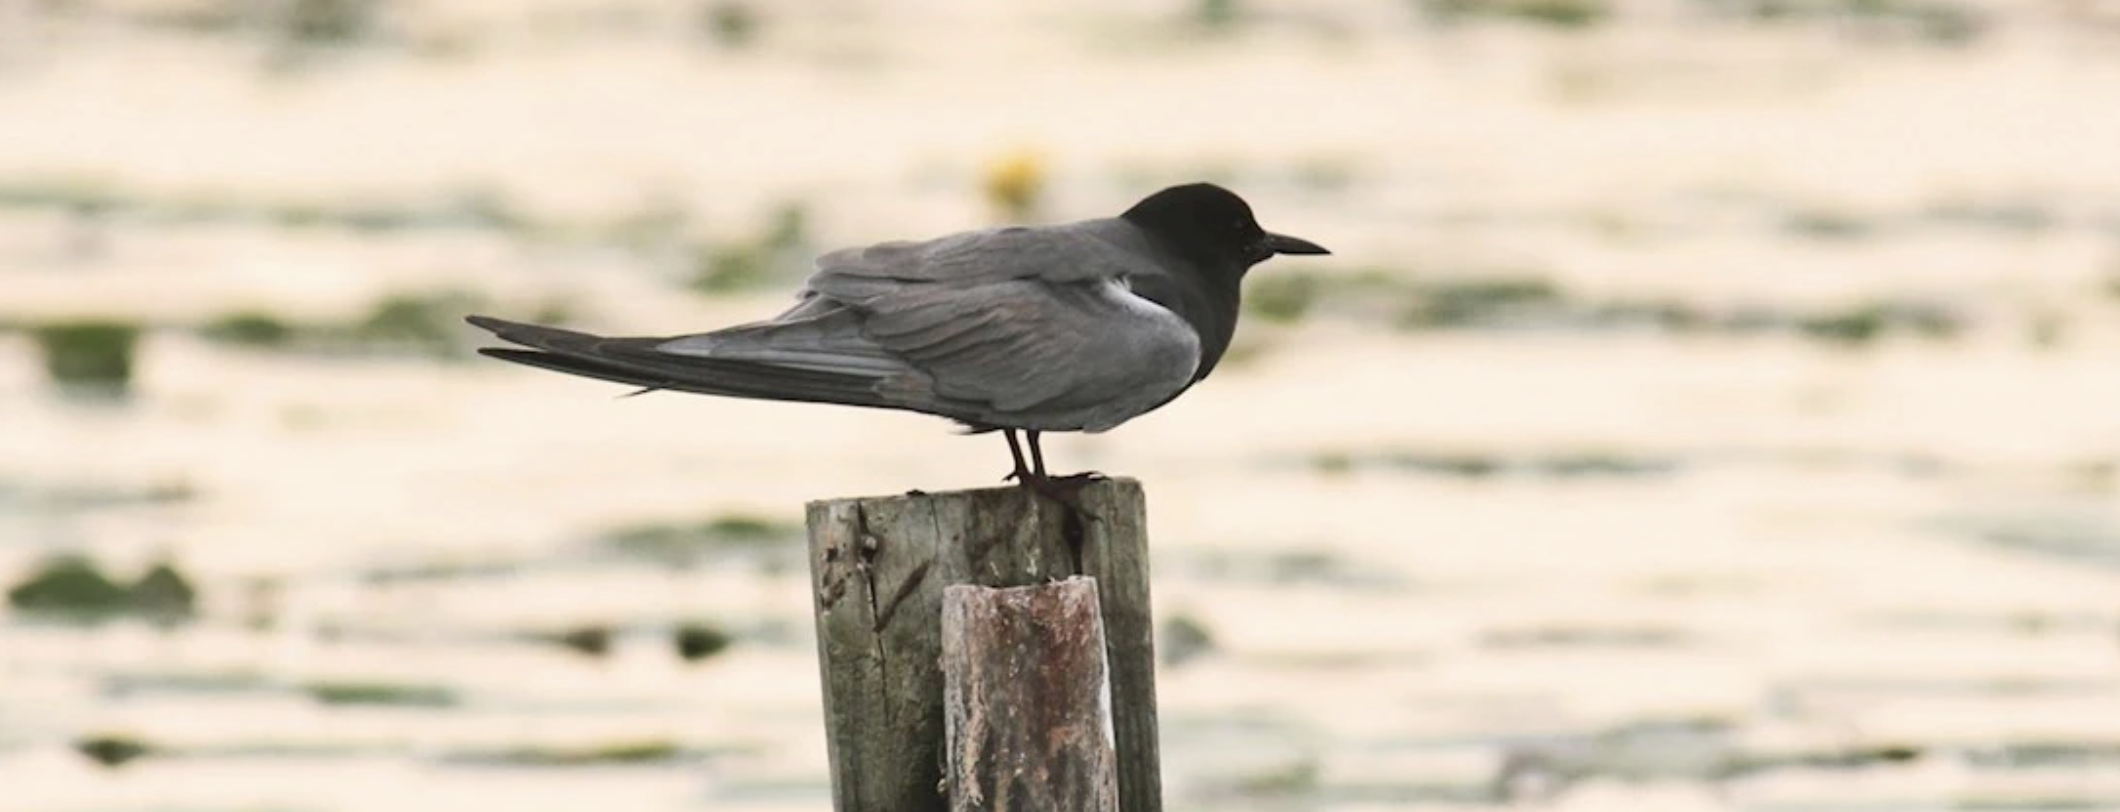 Black tern on post near water